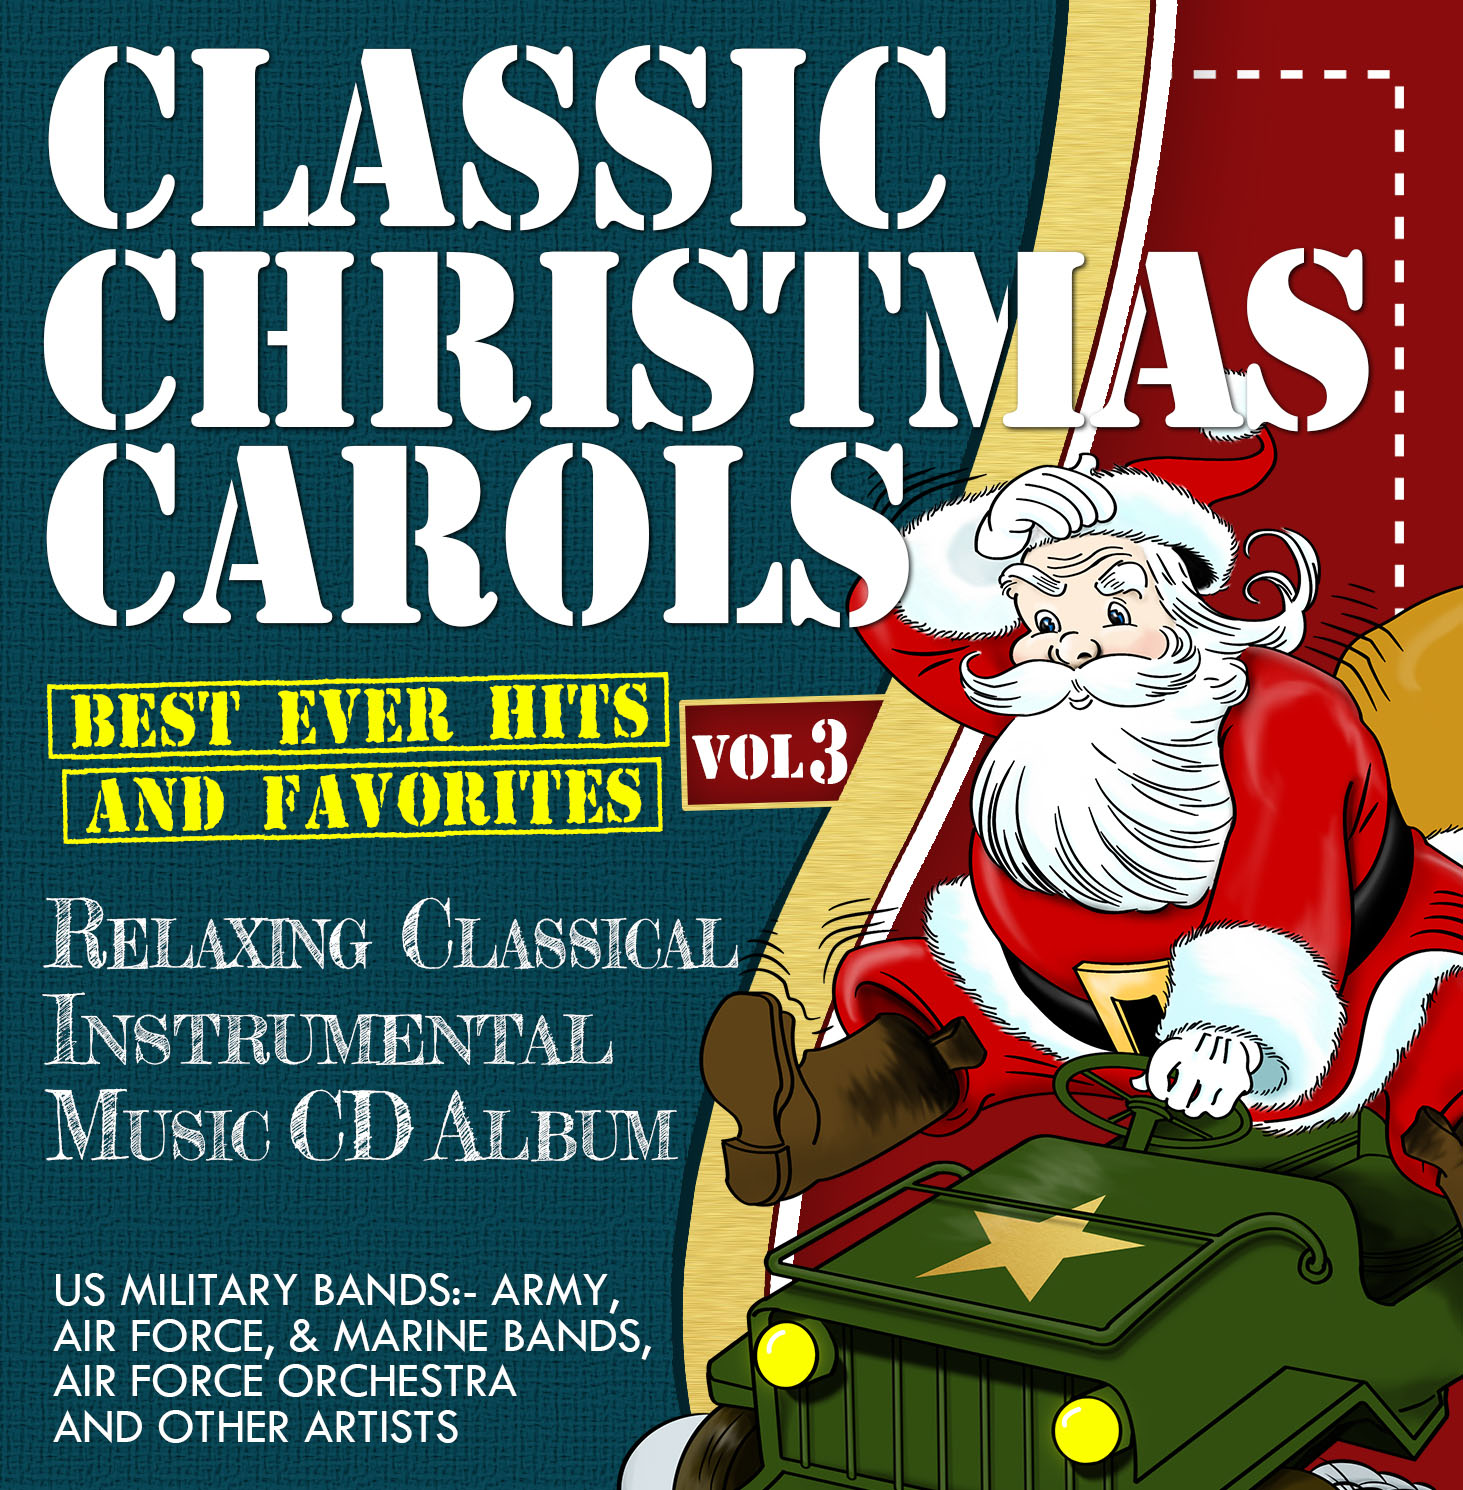 Classic Christmas Carols (Best Ever Hits & Favorites) Volume 3